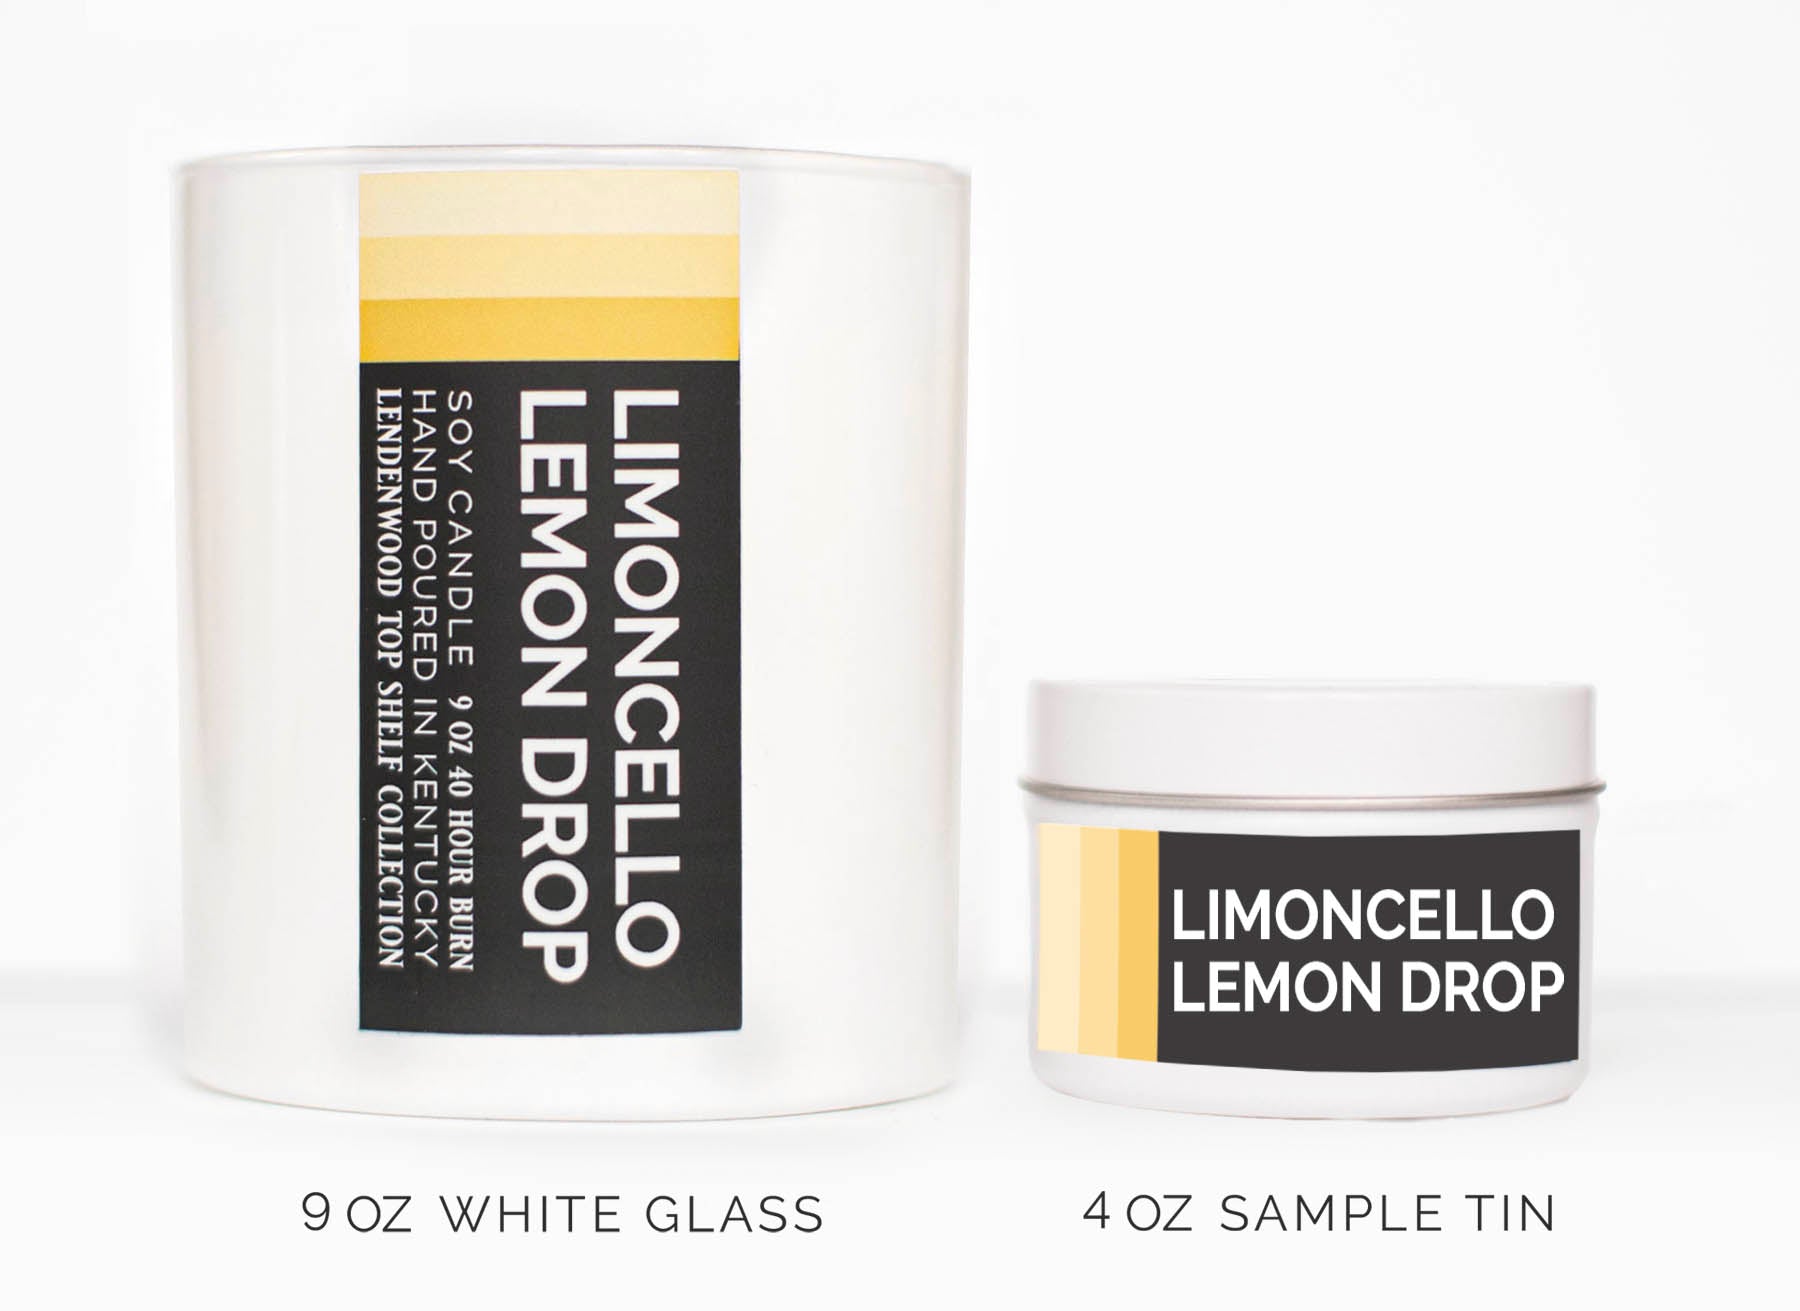 Limoncello Lemon Drop Scented Soy Candle